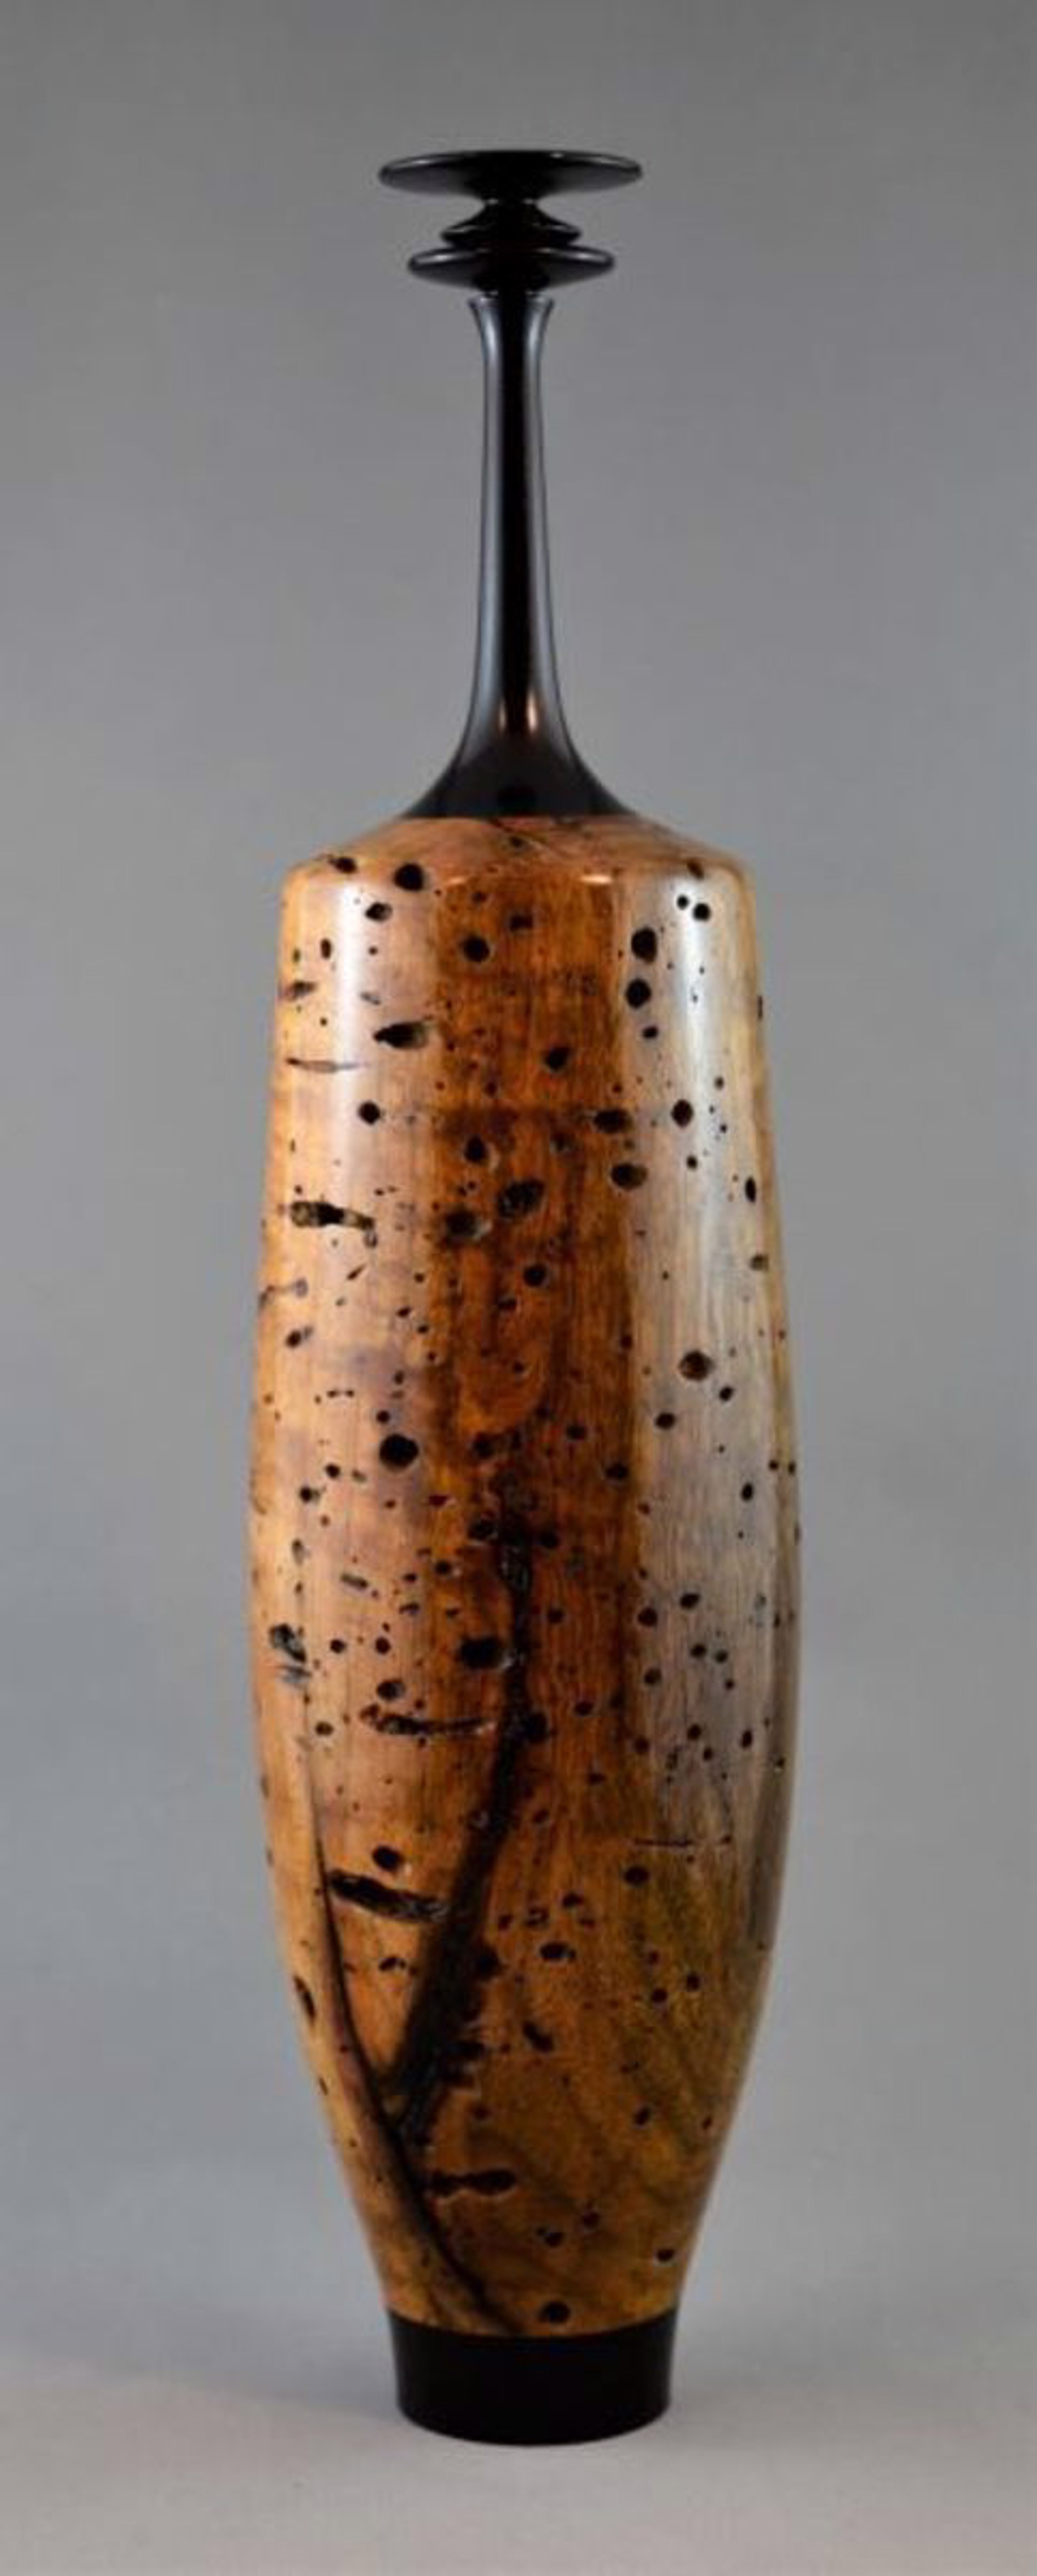 Blackwood and Wormy Butternut Vase by Paul Gray Diamond